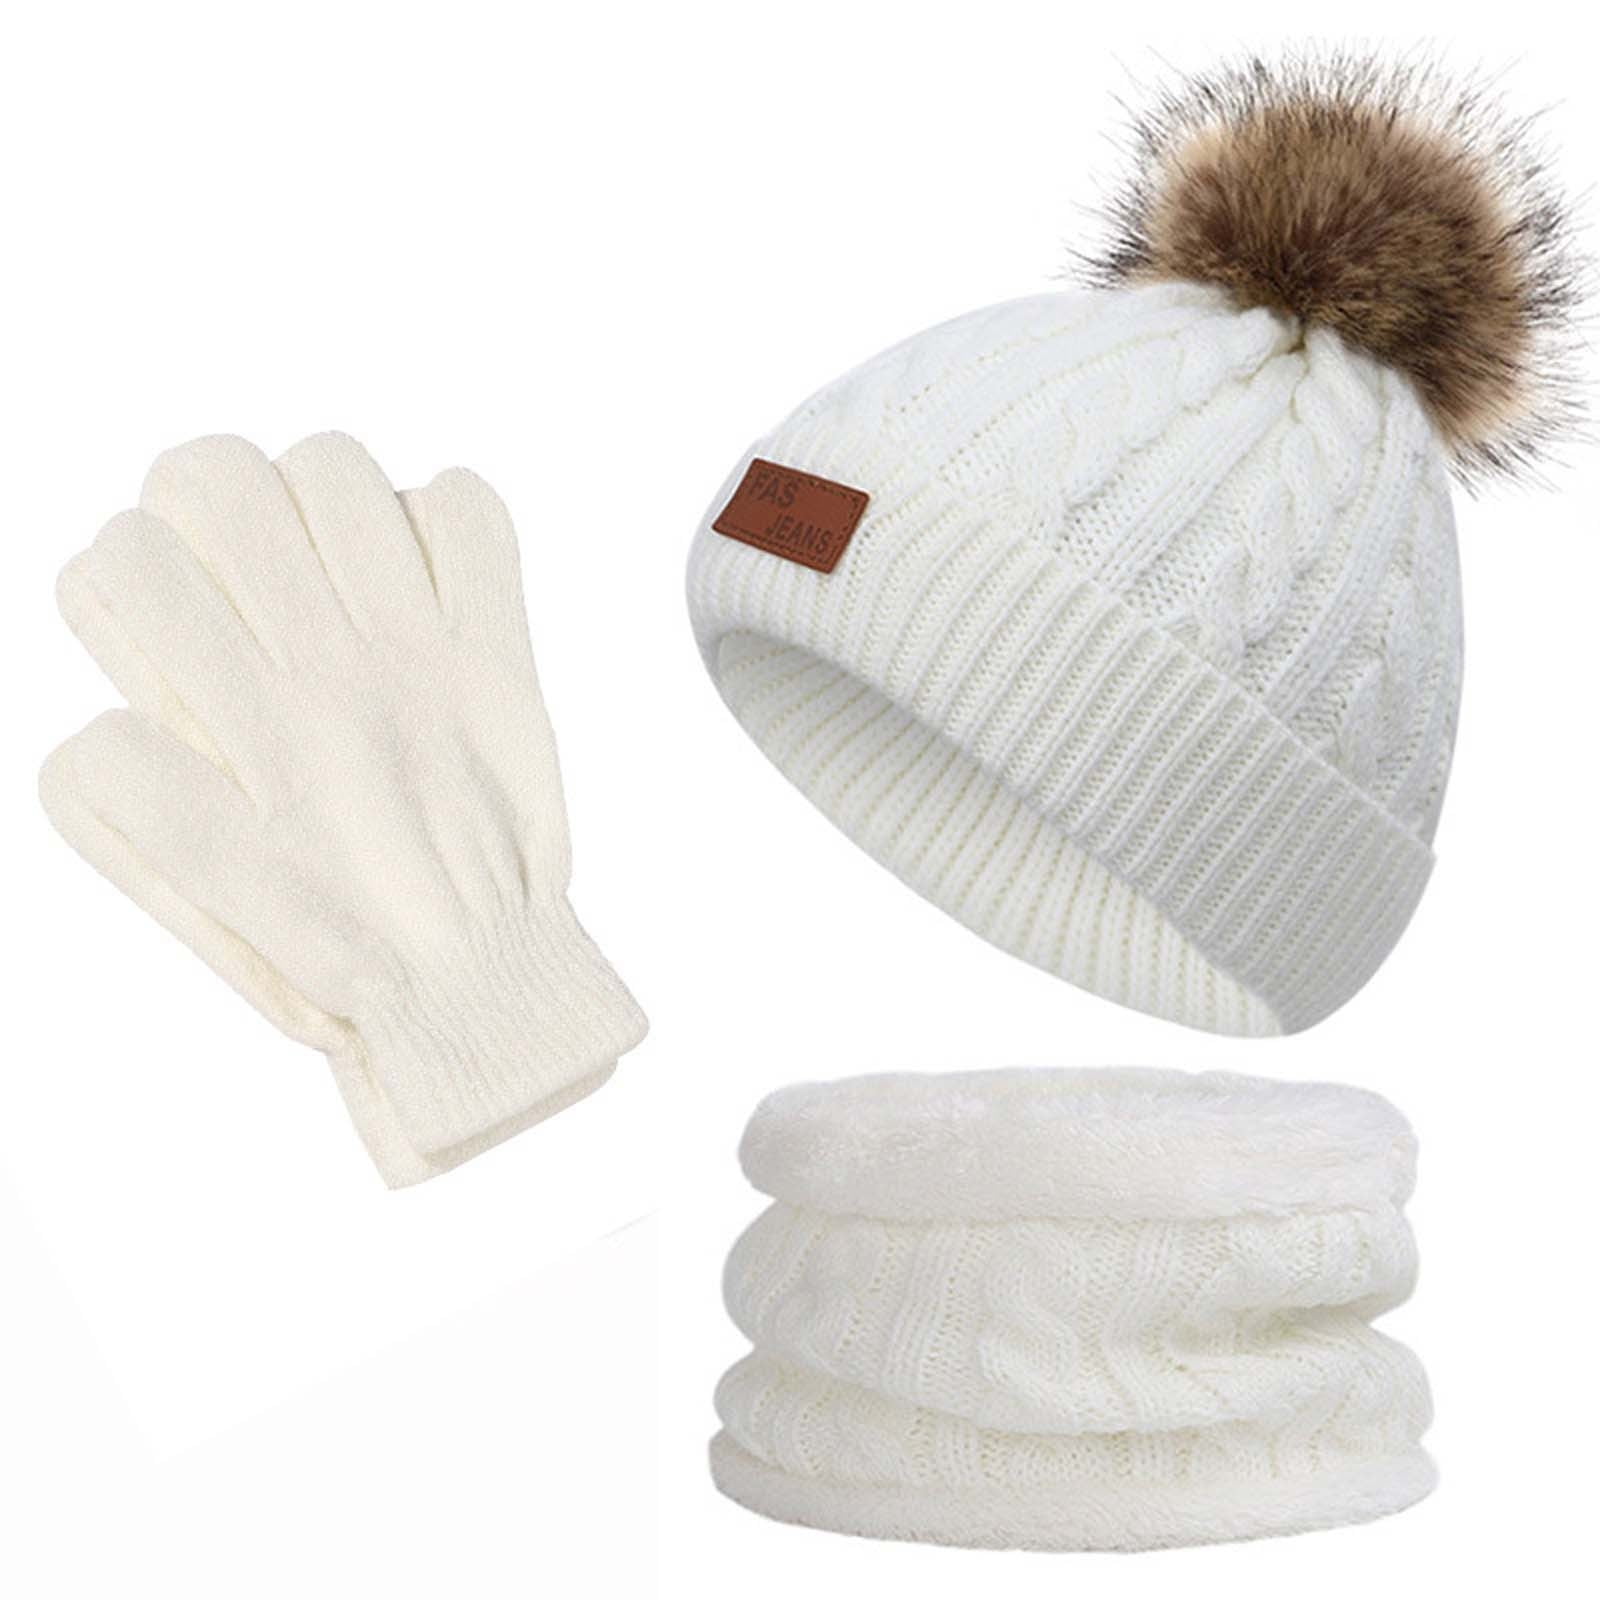 CHGBMOK Winter Gloves Kids Winter Beanie Hat Warm Knit Thick Ski Cap ...